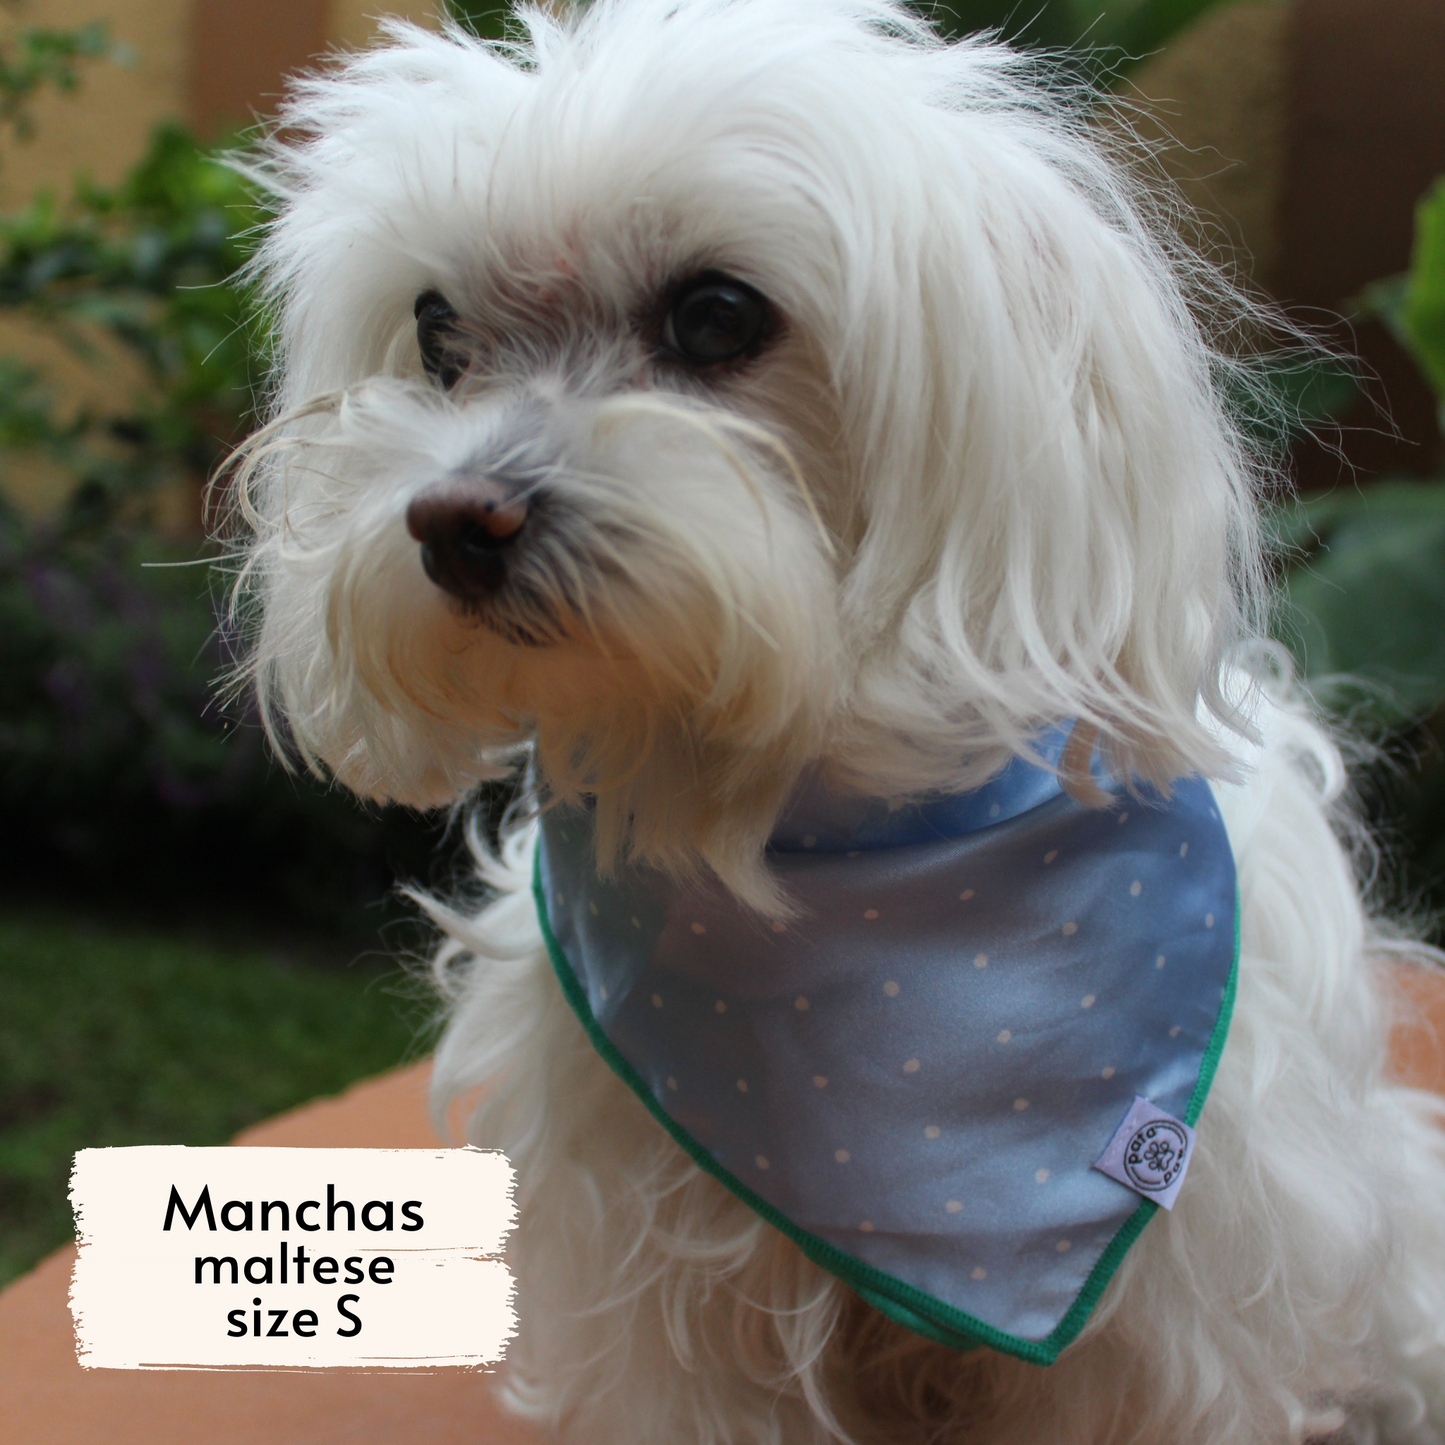 Pata Paw blue polka dots bandana as seen on a small dog, Manchas, a maltese